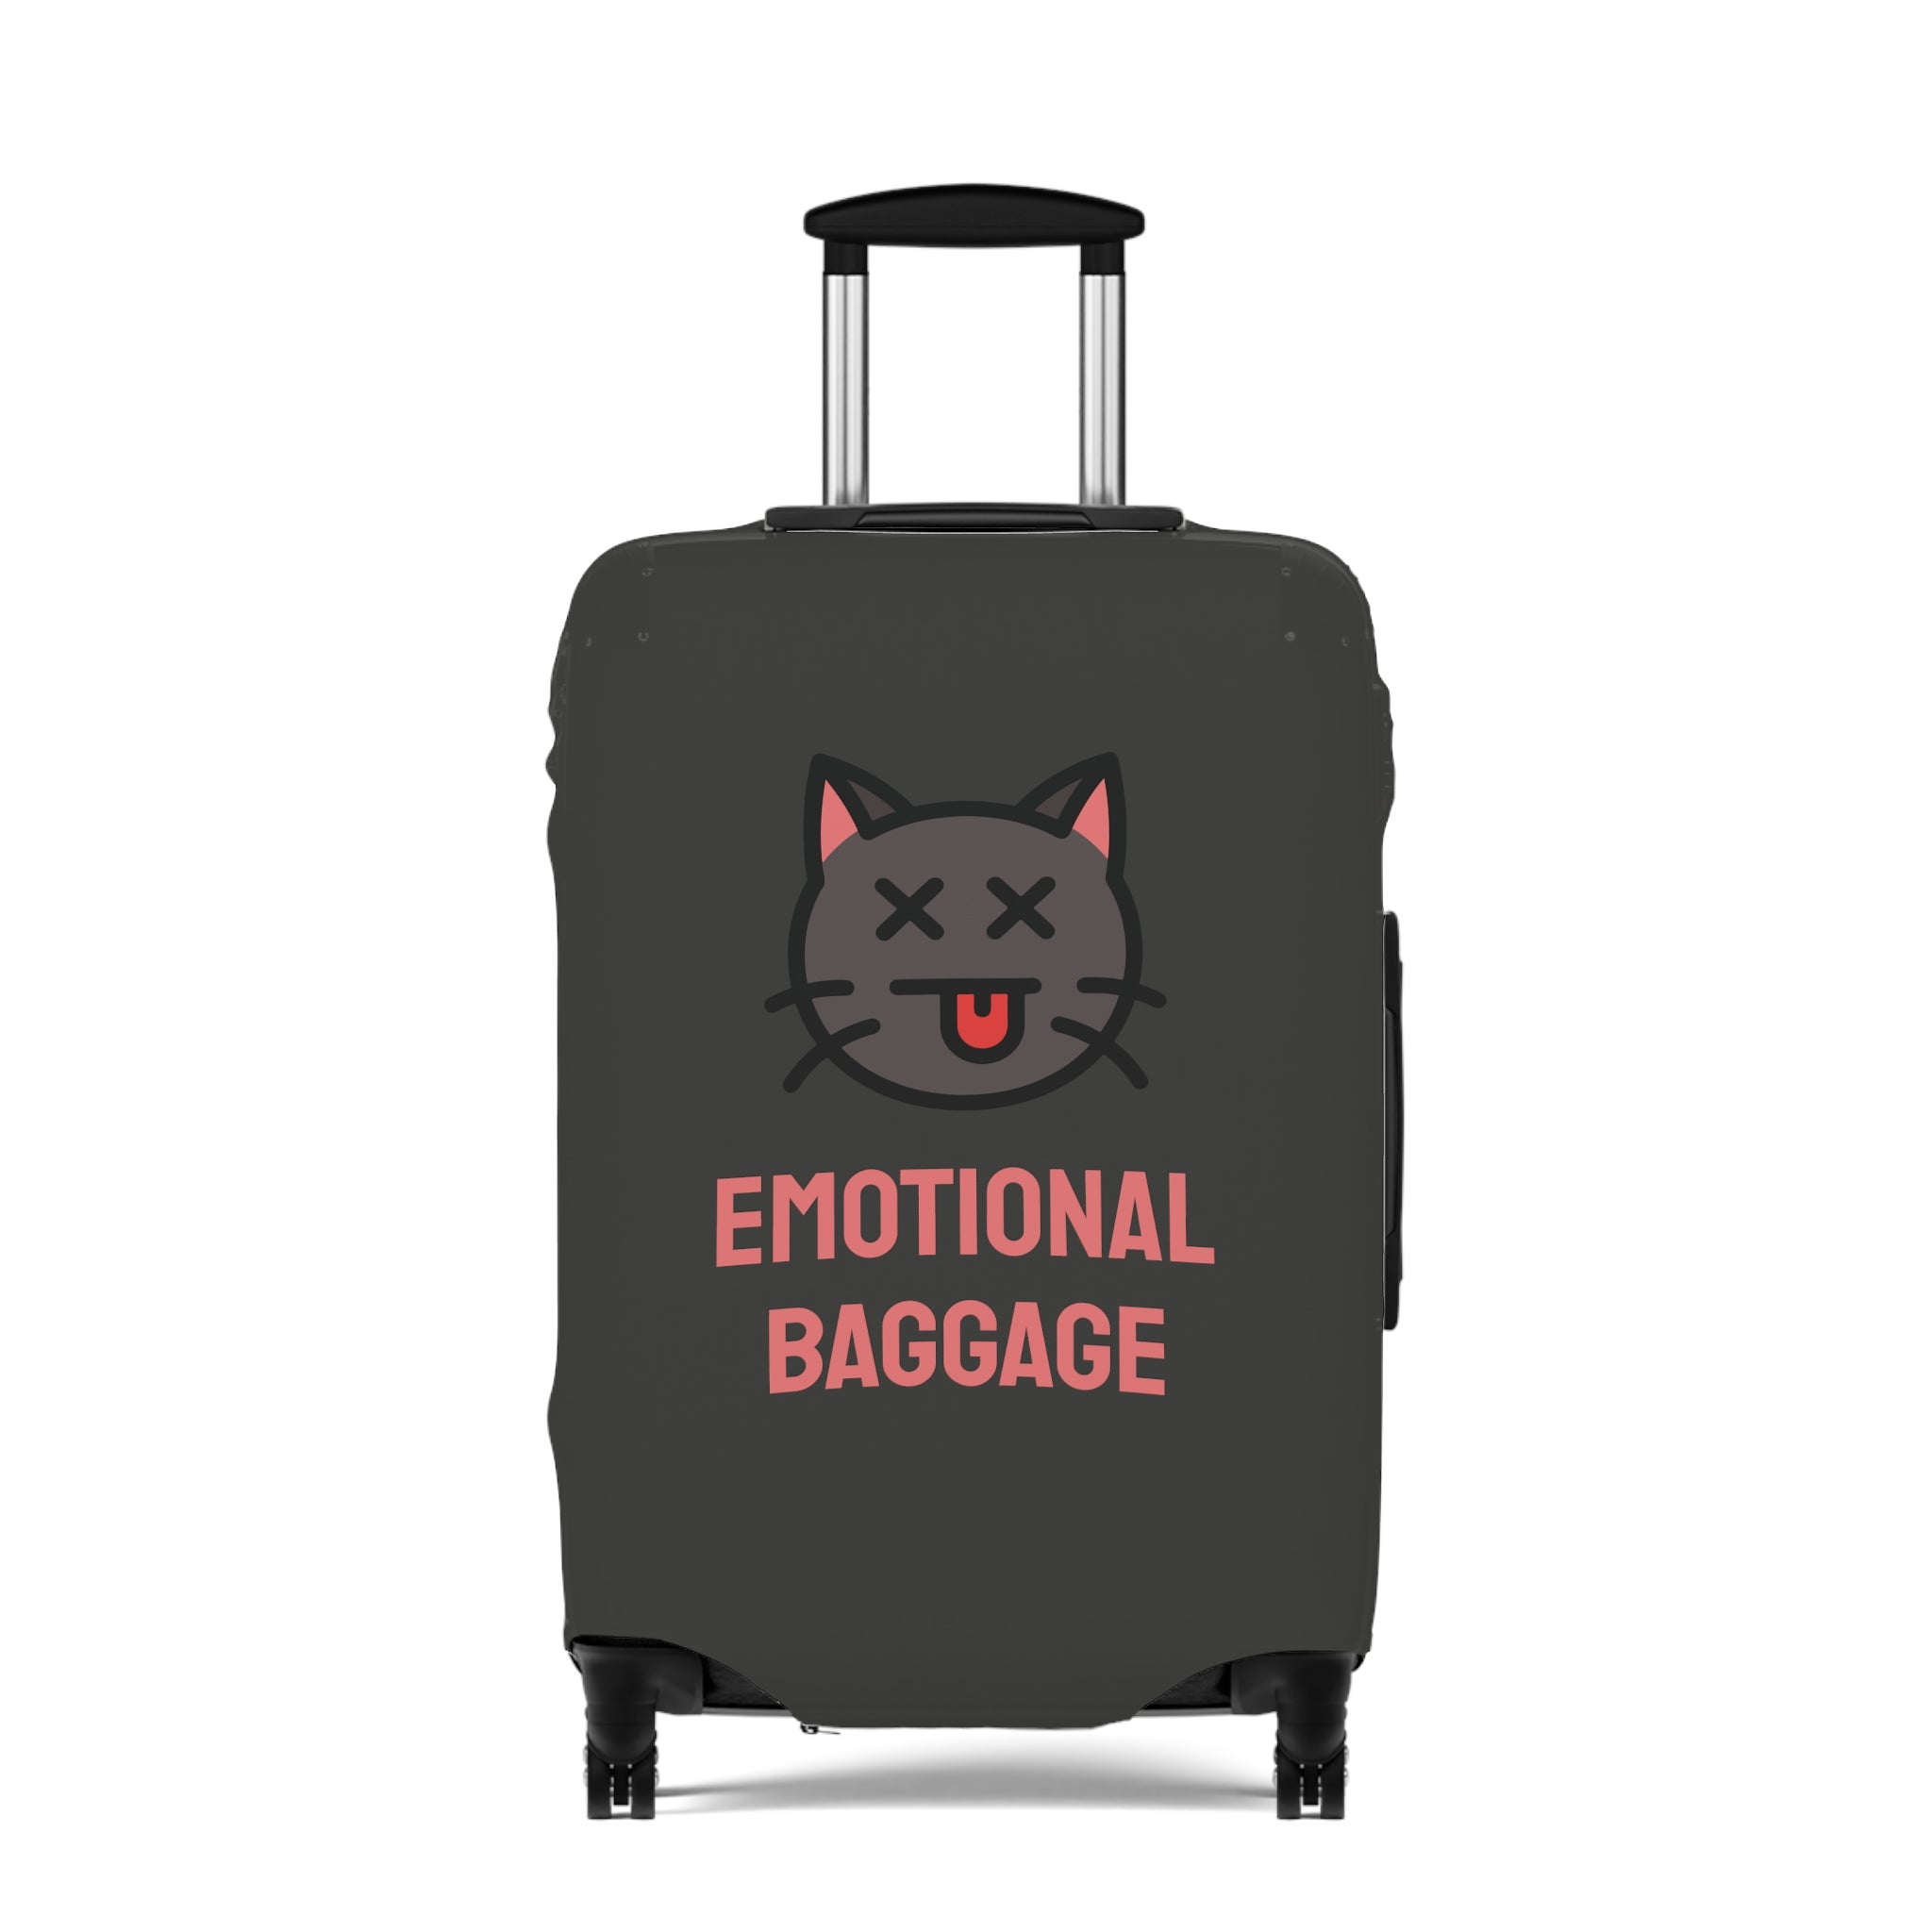 Emotional baggage Luggage Cover (Black)